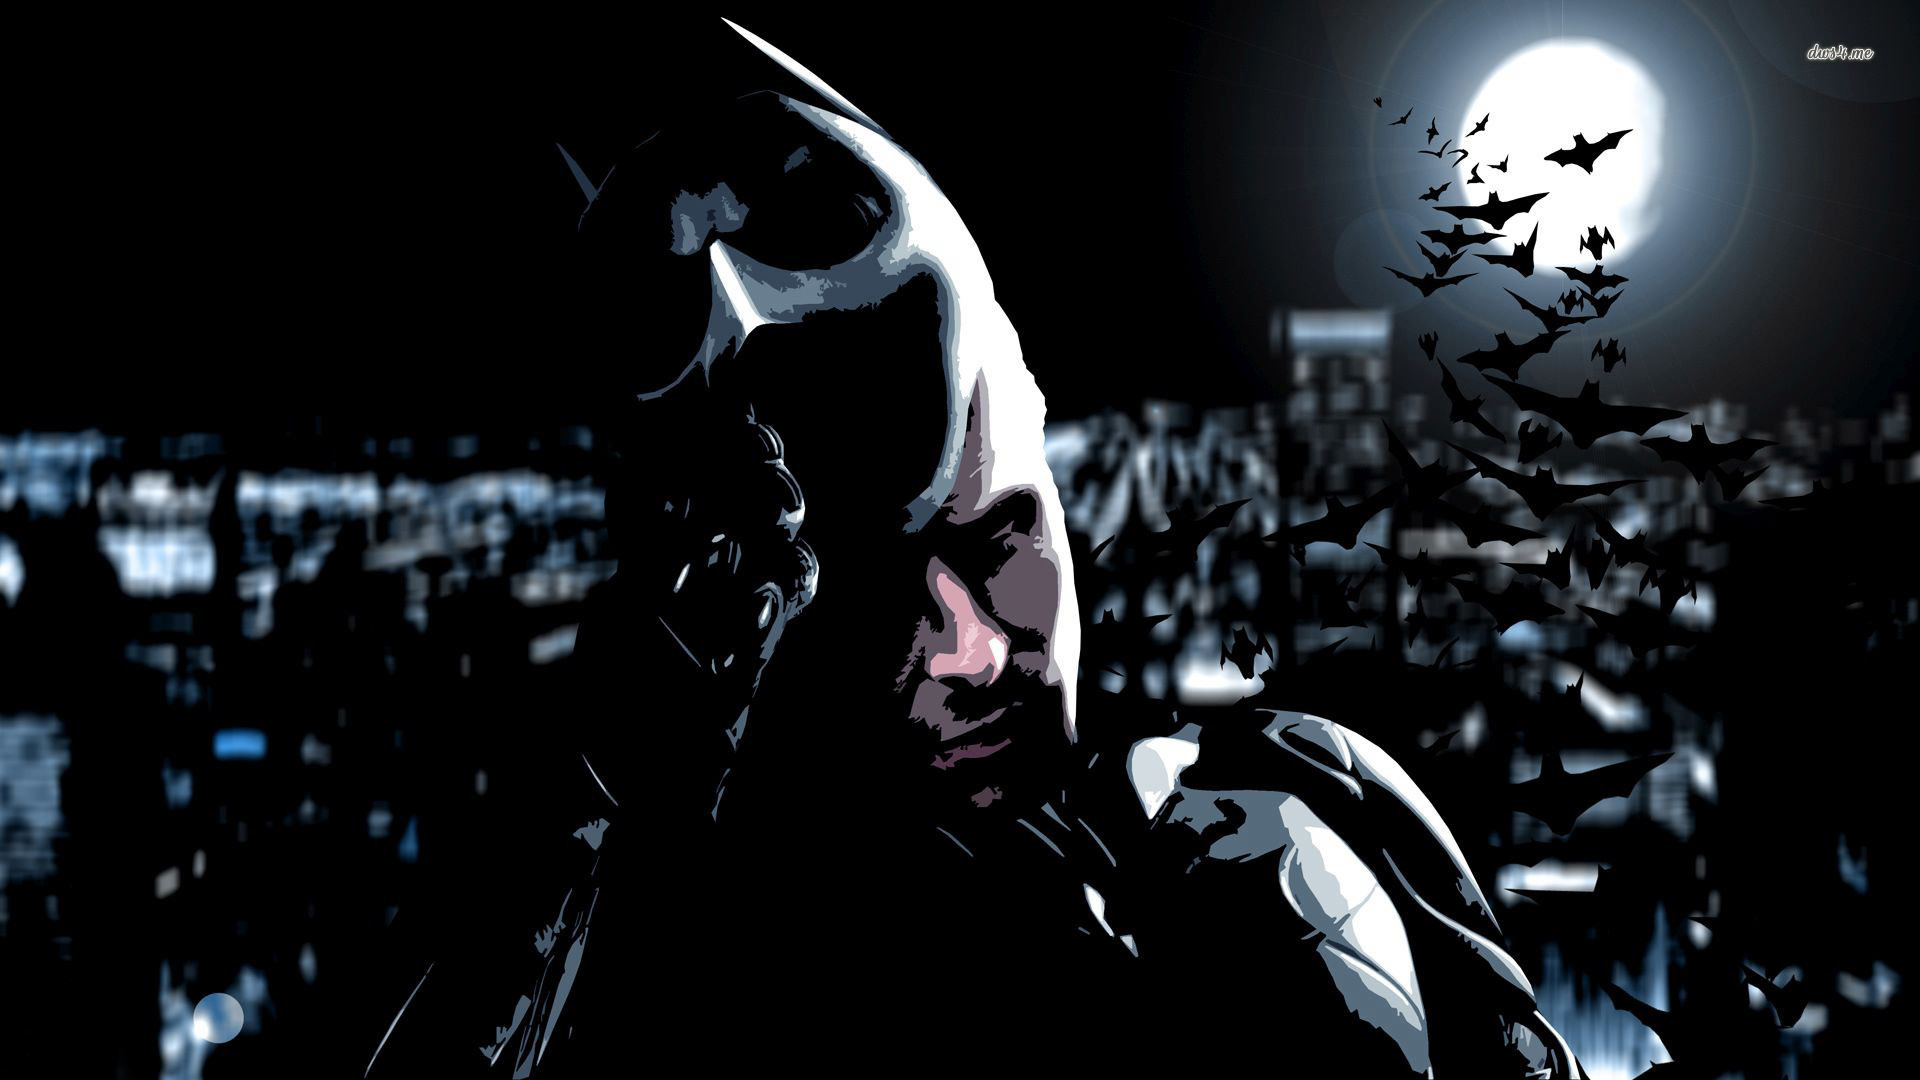 43317 batman taking off the mask in the dark knight 1920x1080 ...